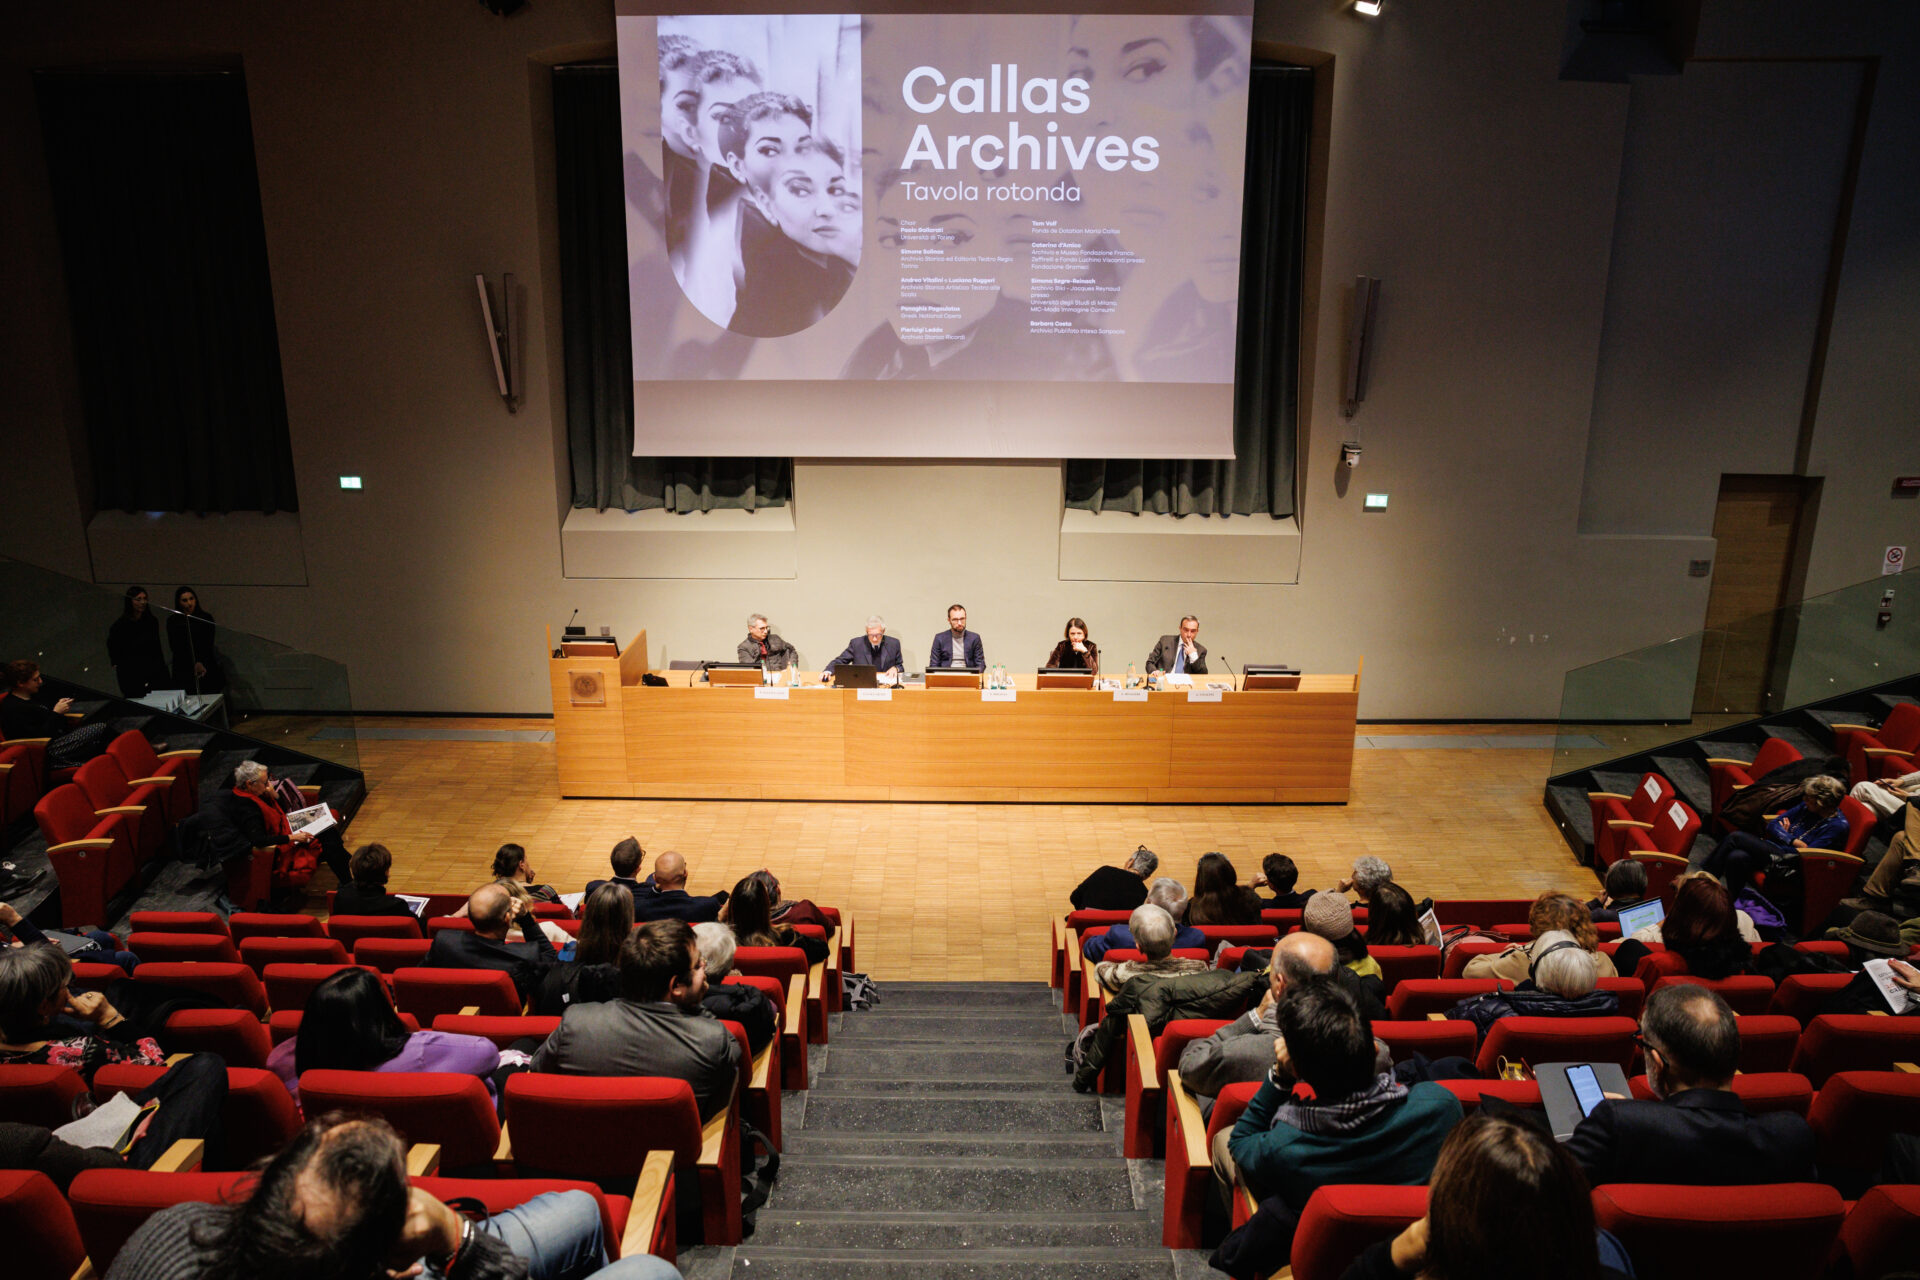 05 - Callas Archives – Tavola rotonda